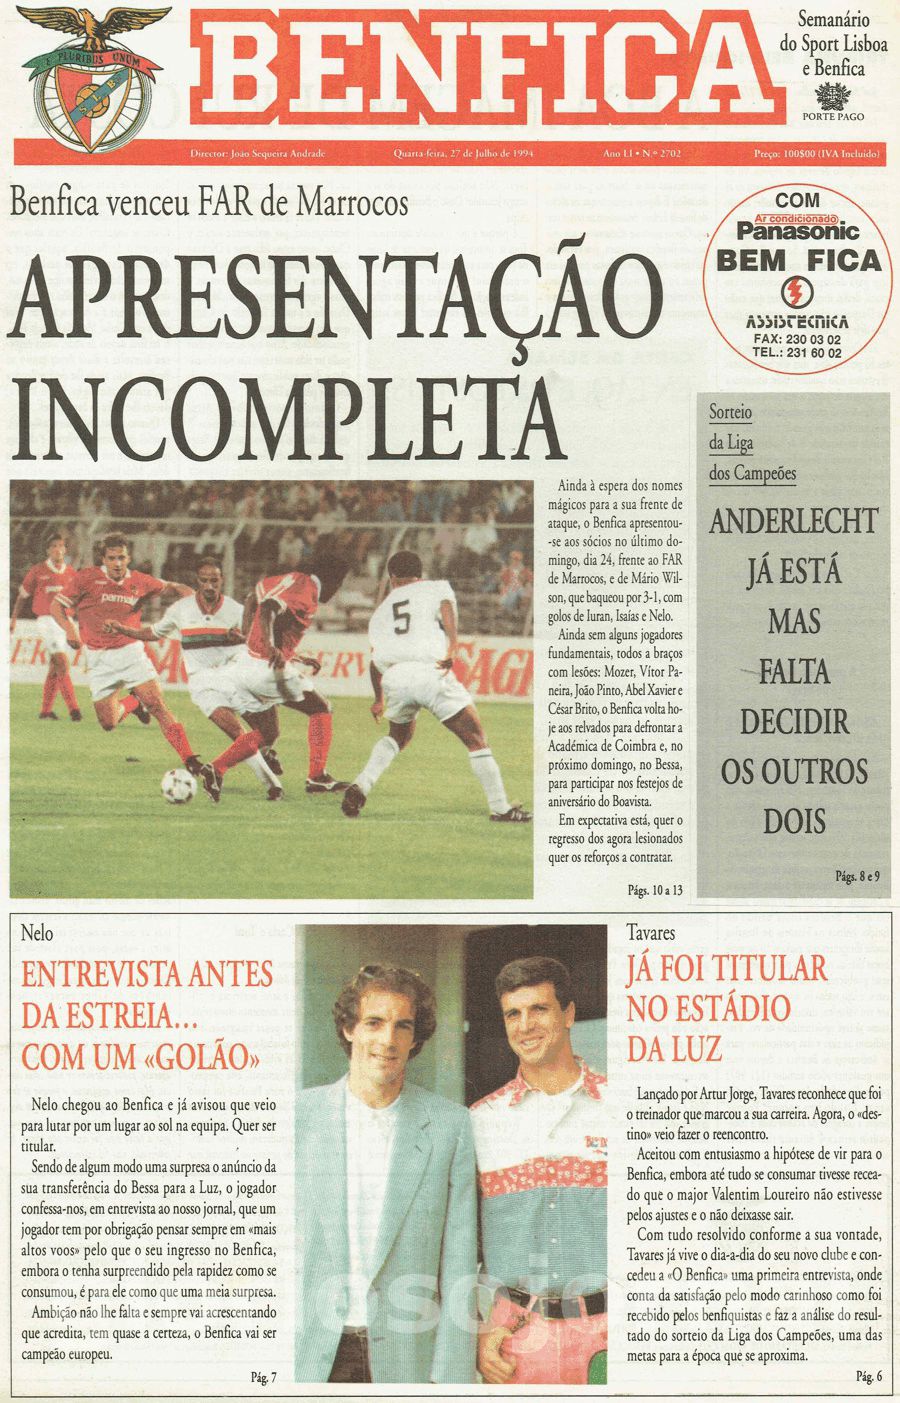 jornal o benfica 2702 1994-07-27